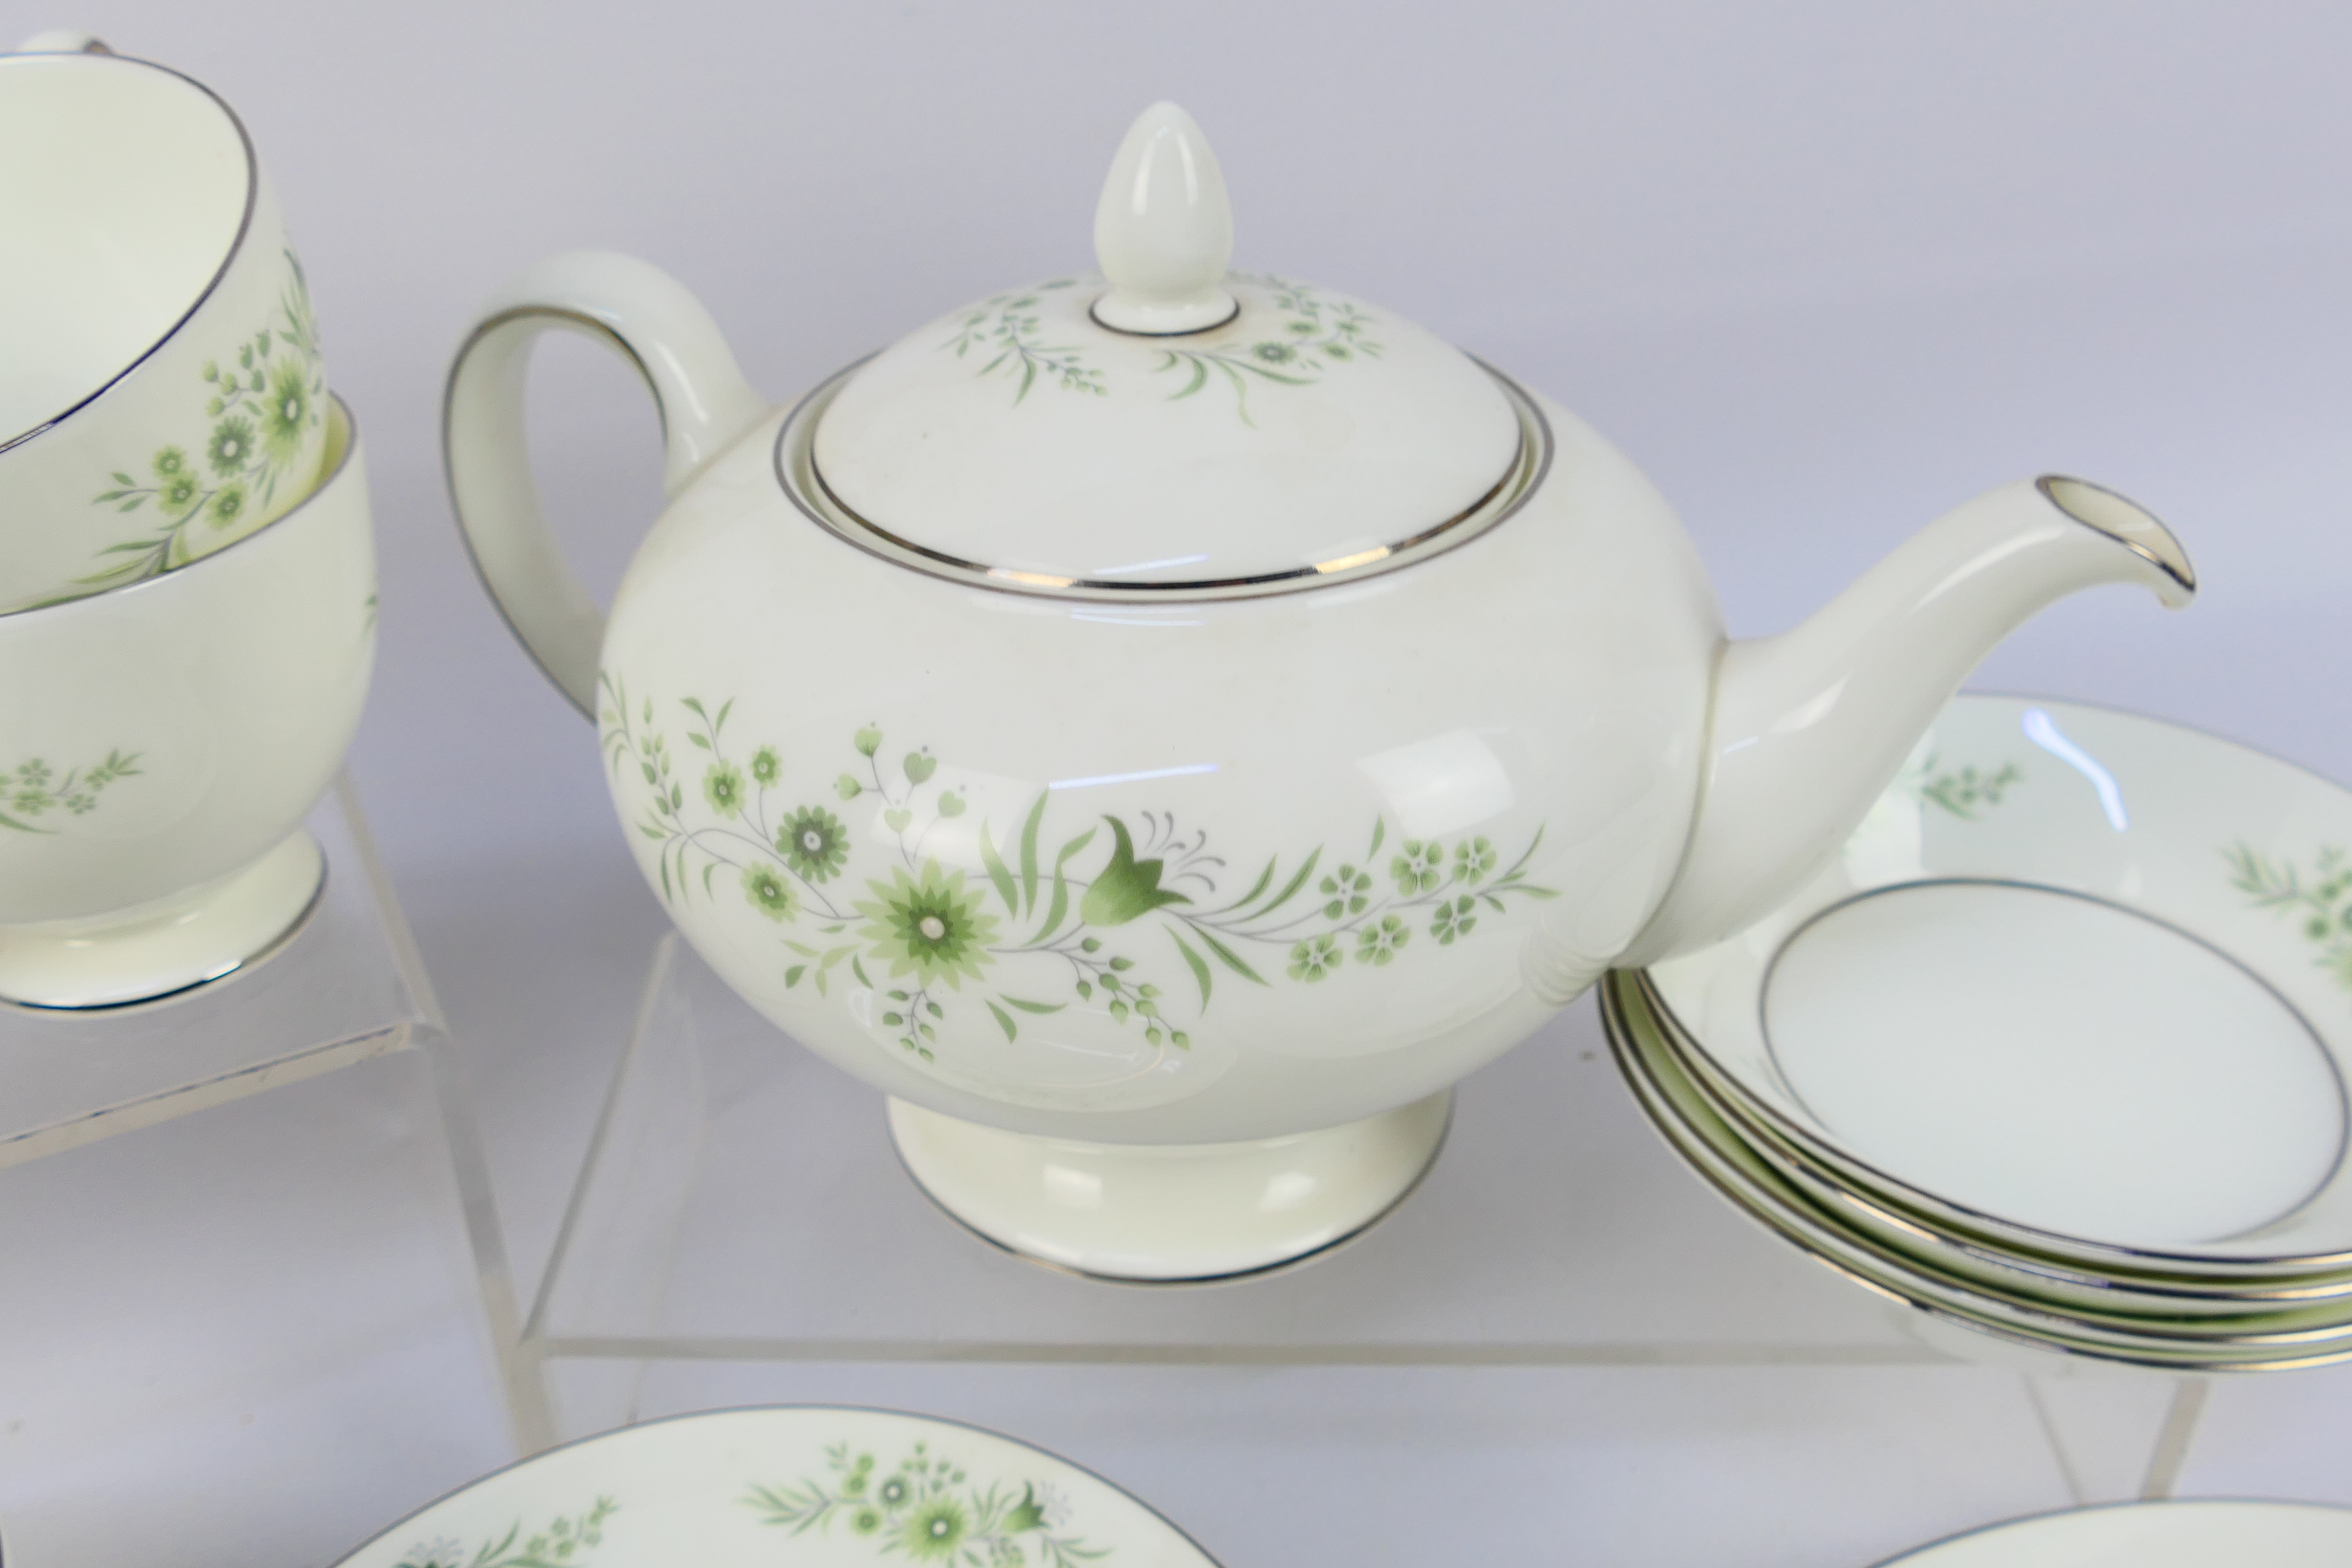 Wedgwood - A Wedgwood ceramic tea service set - Set has floral patterns. - Image 3 of 4